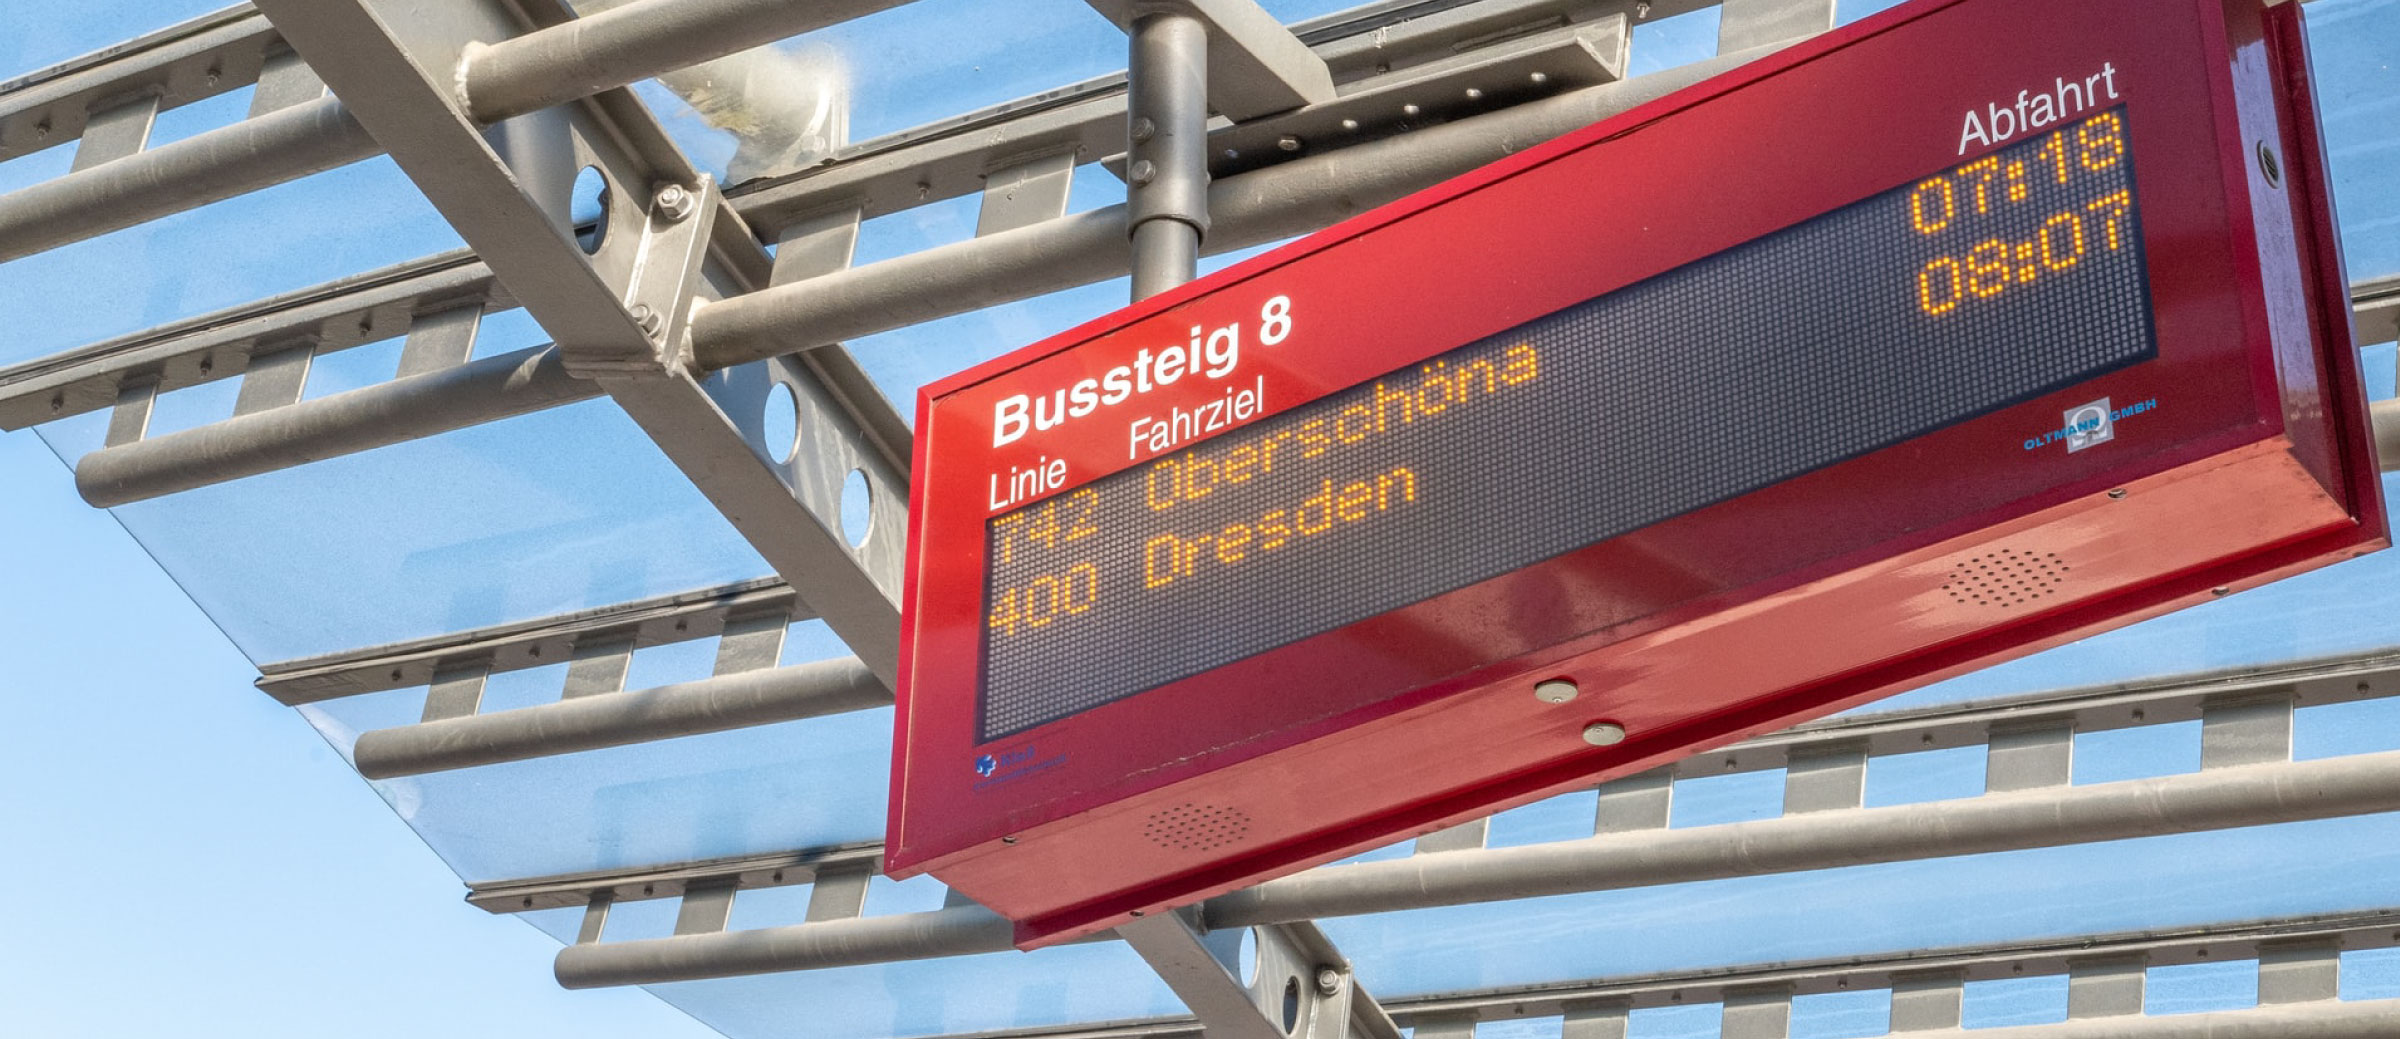 Bus stop in Germany. Photo: Unsplash.